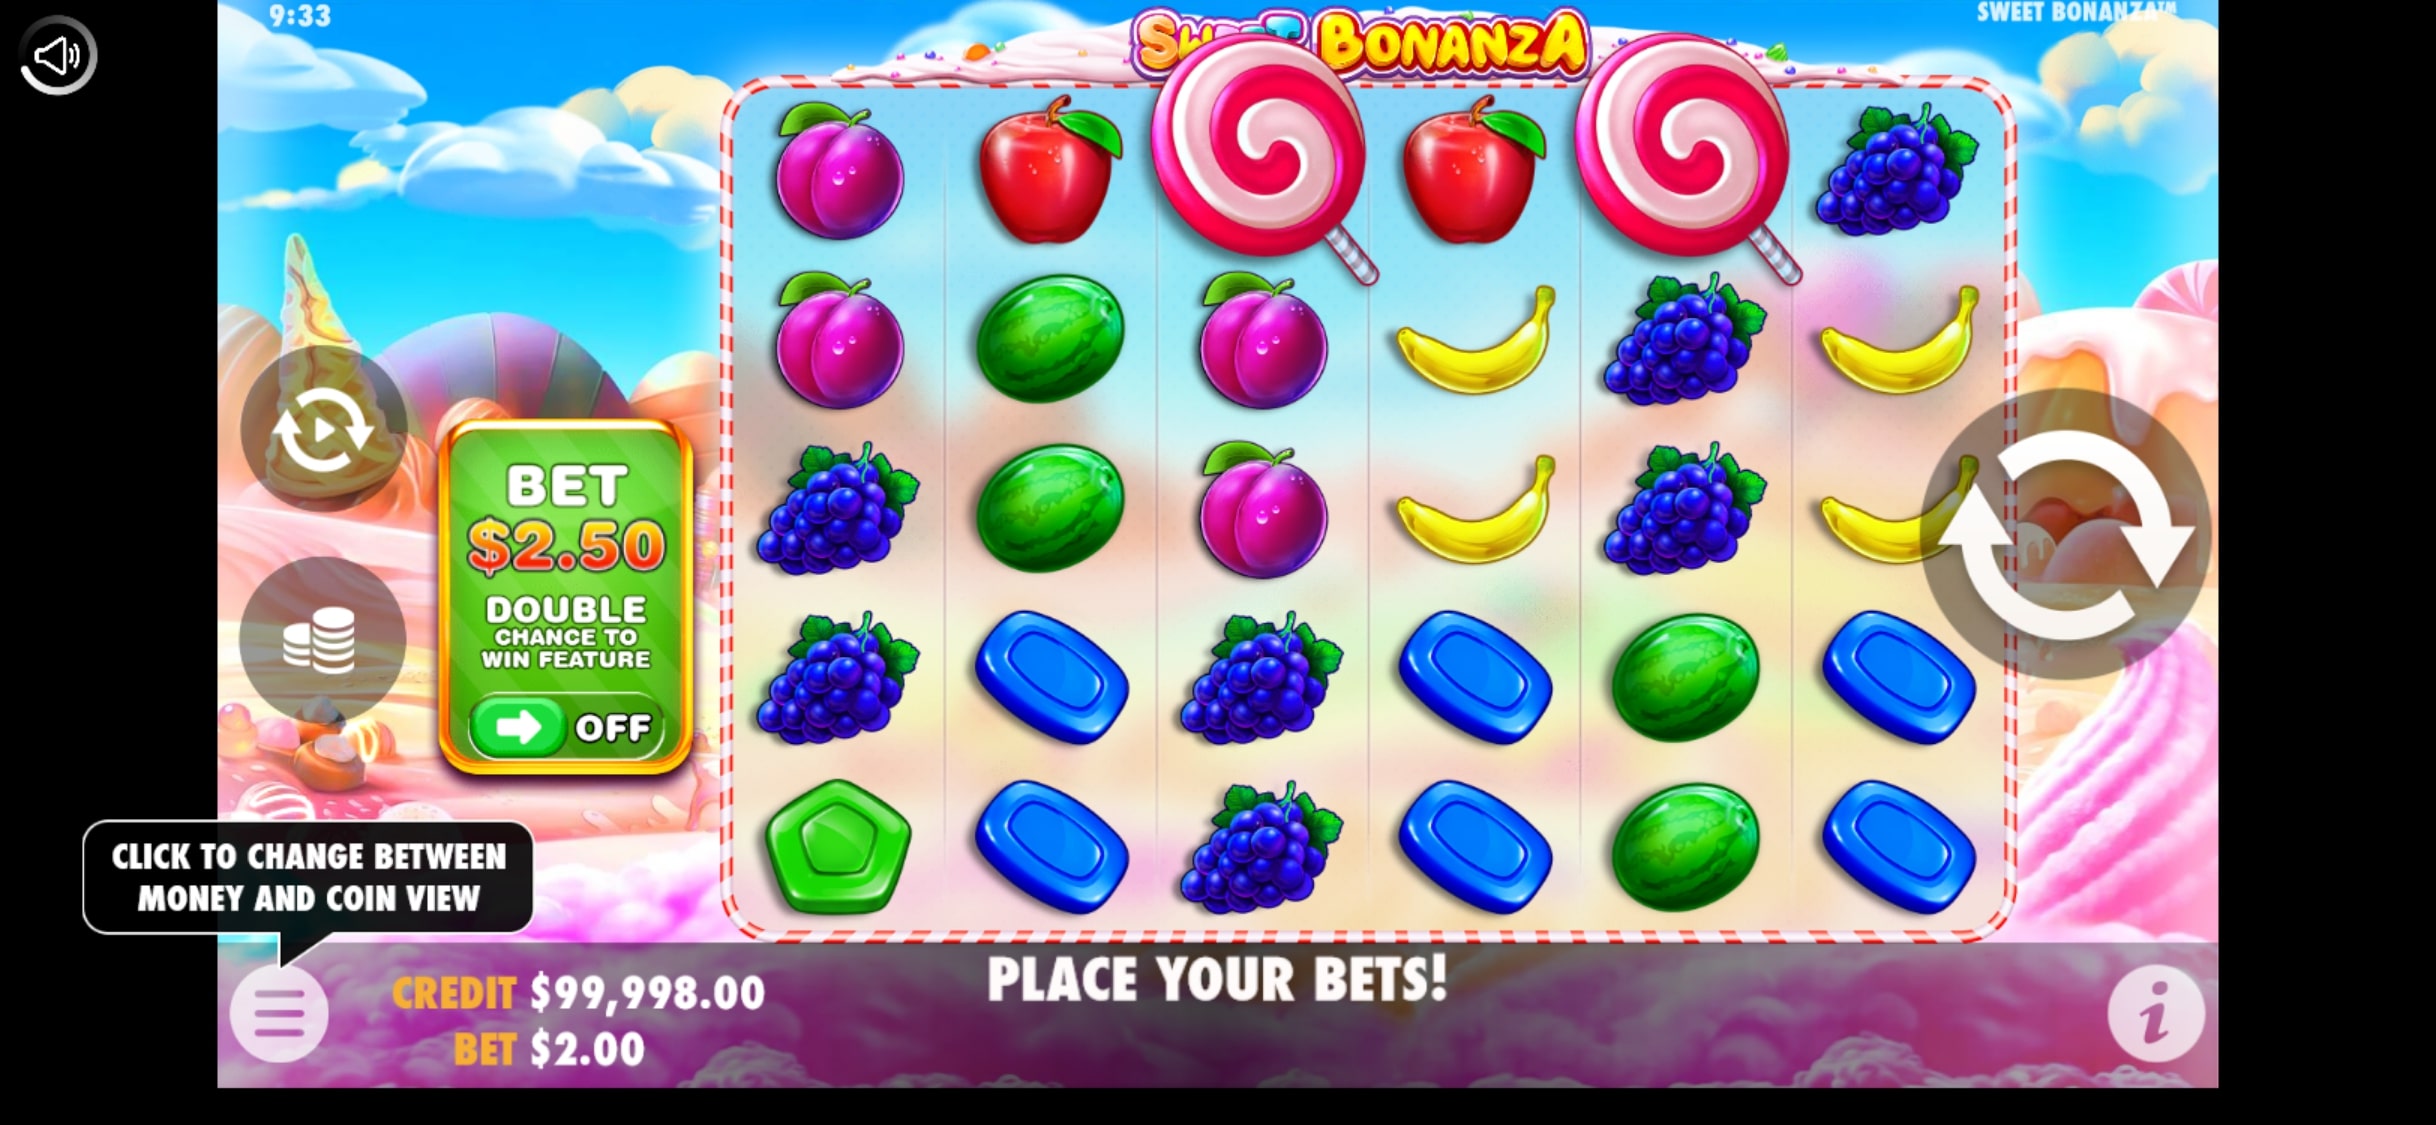 21BetShop Casino Mobile Slot Games Review